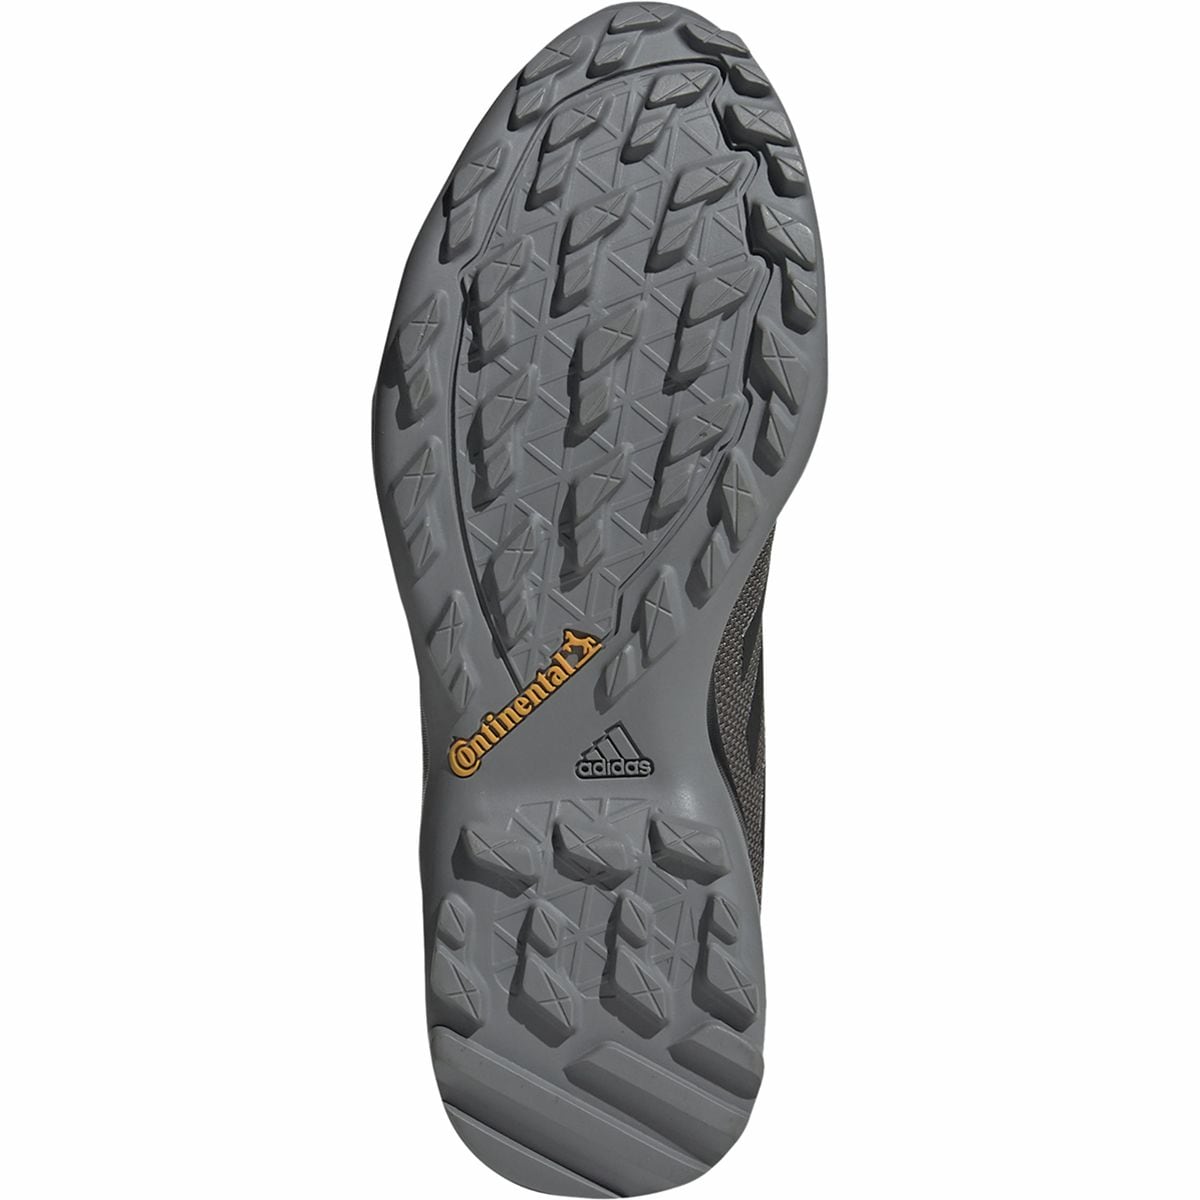 adidas outdoor men's terrex ax3 mid gtx hiking boot